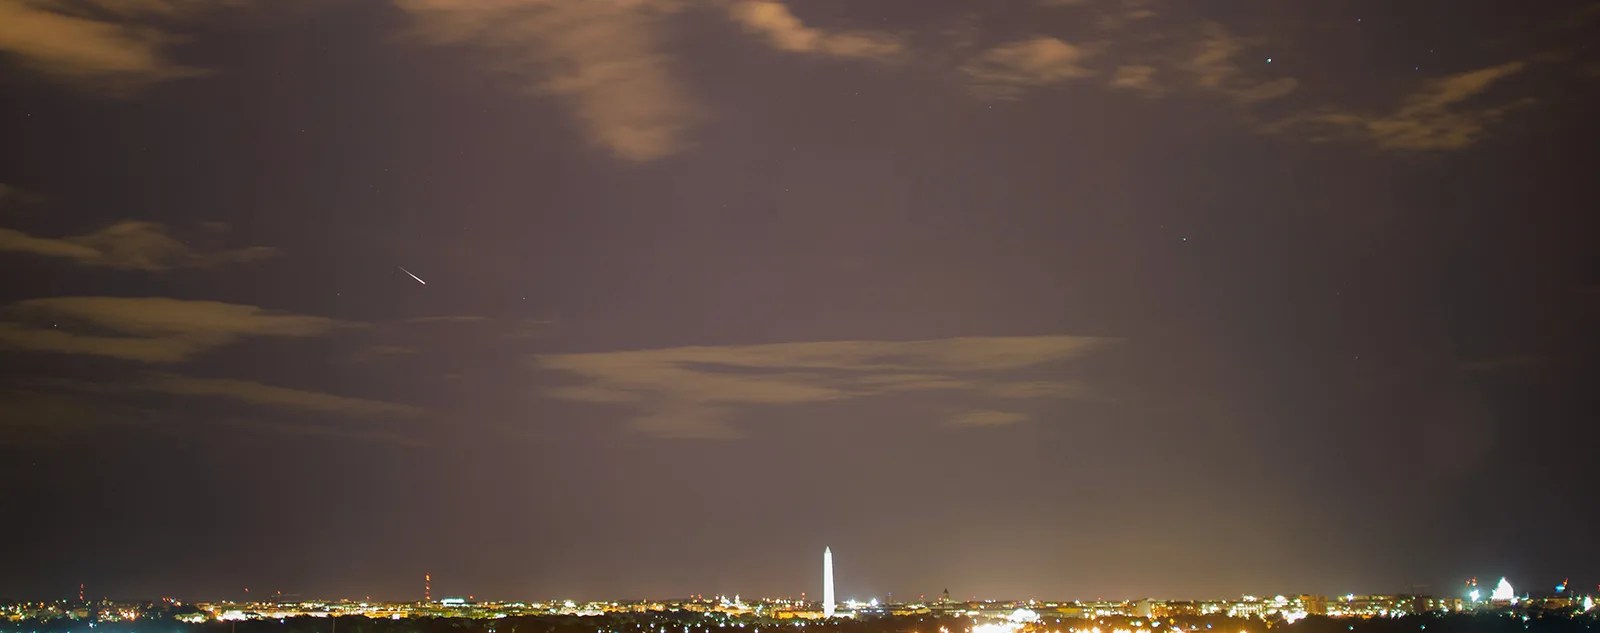 Meteor streak over Washington, DC.